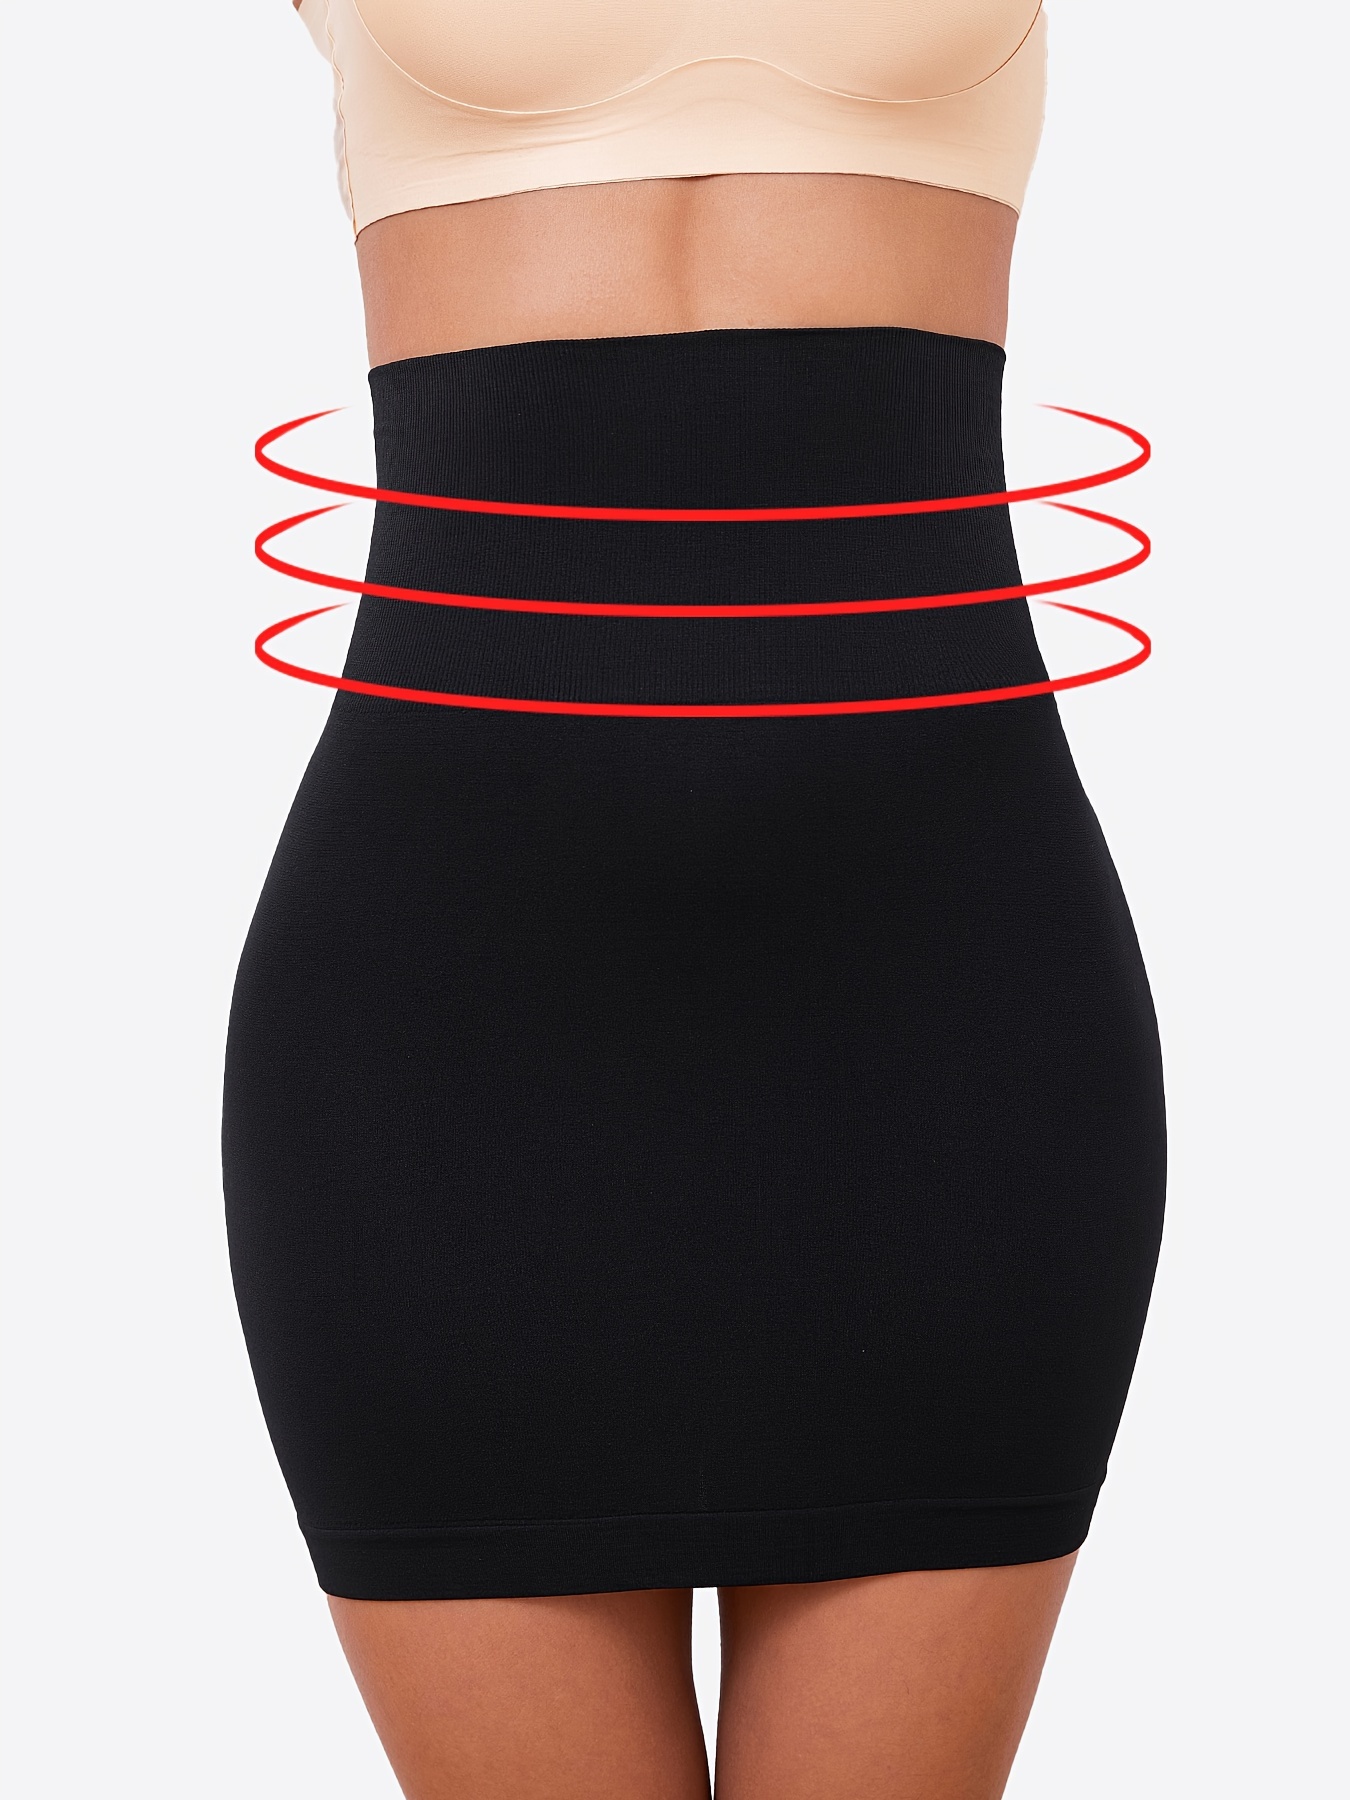 High Waist Tummy Control Slips Women Seamless Skirt Half Slip